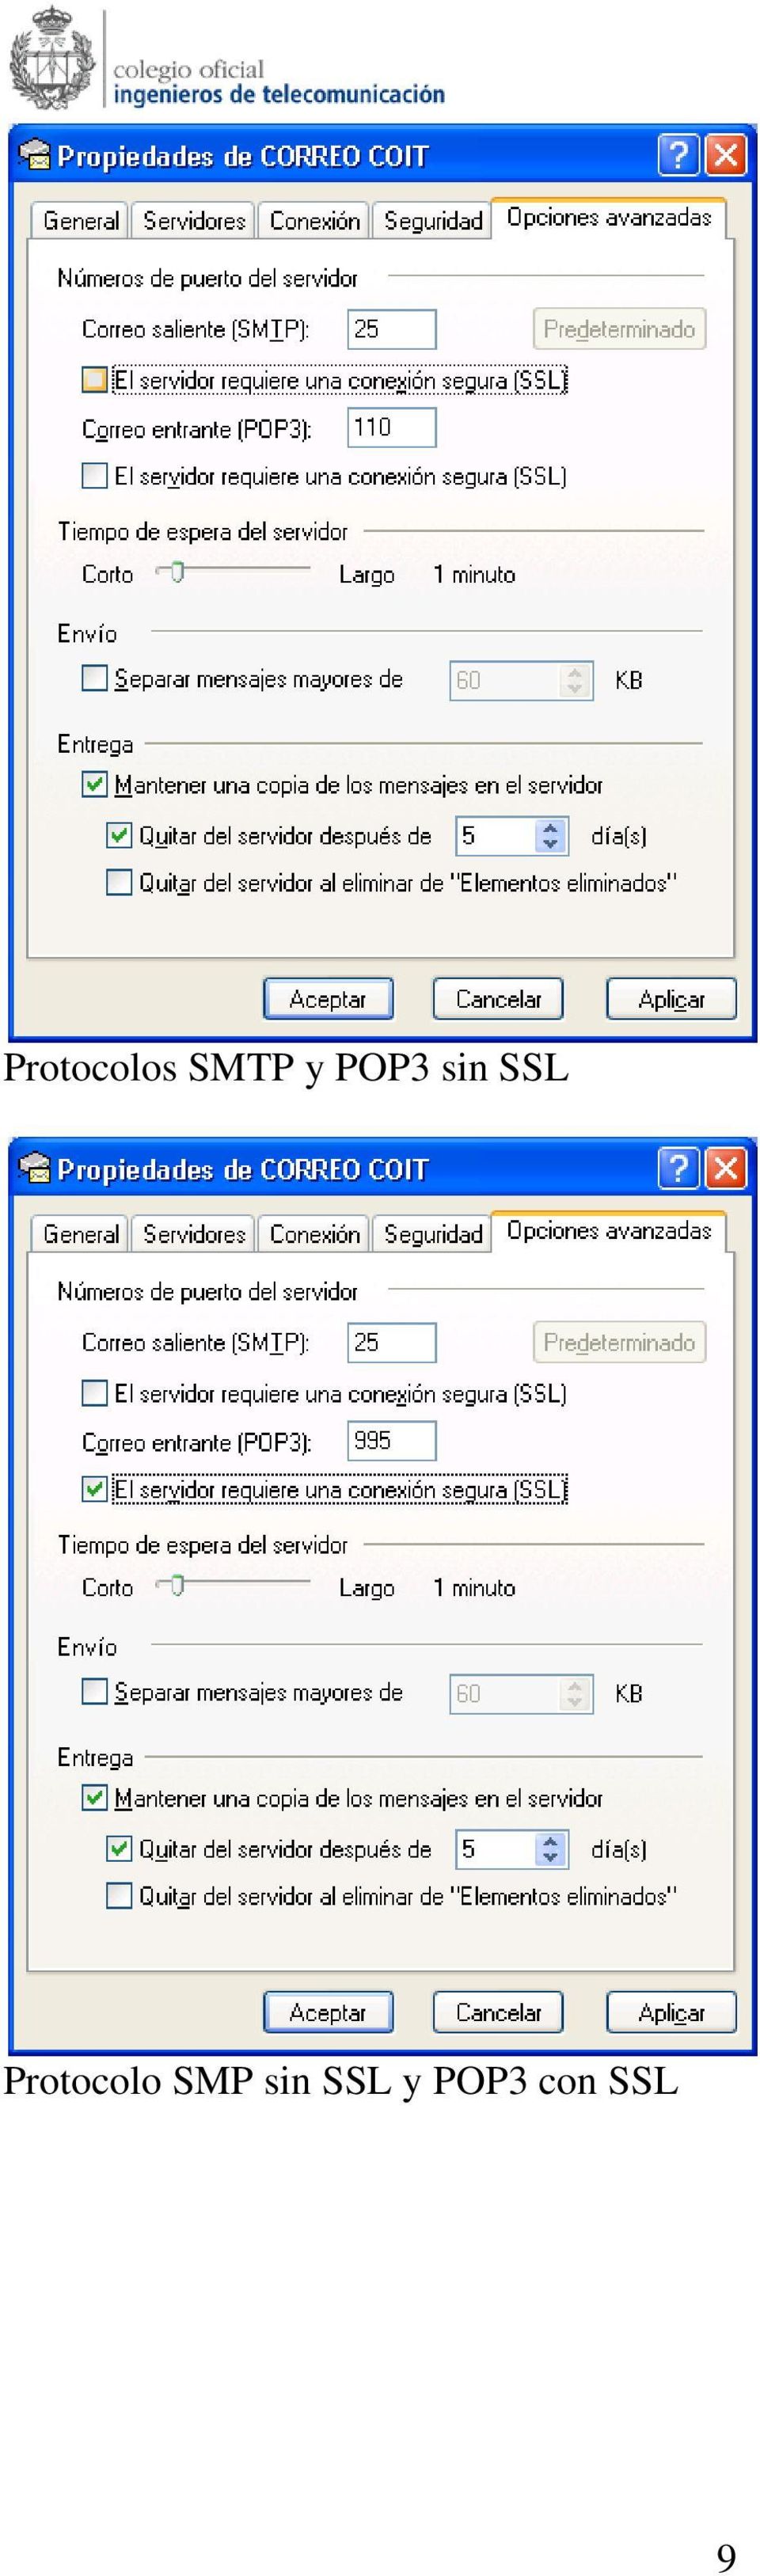 Protocolo SMP sin